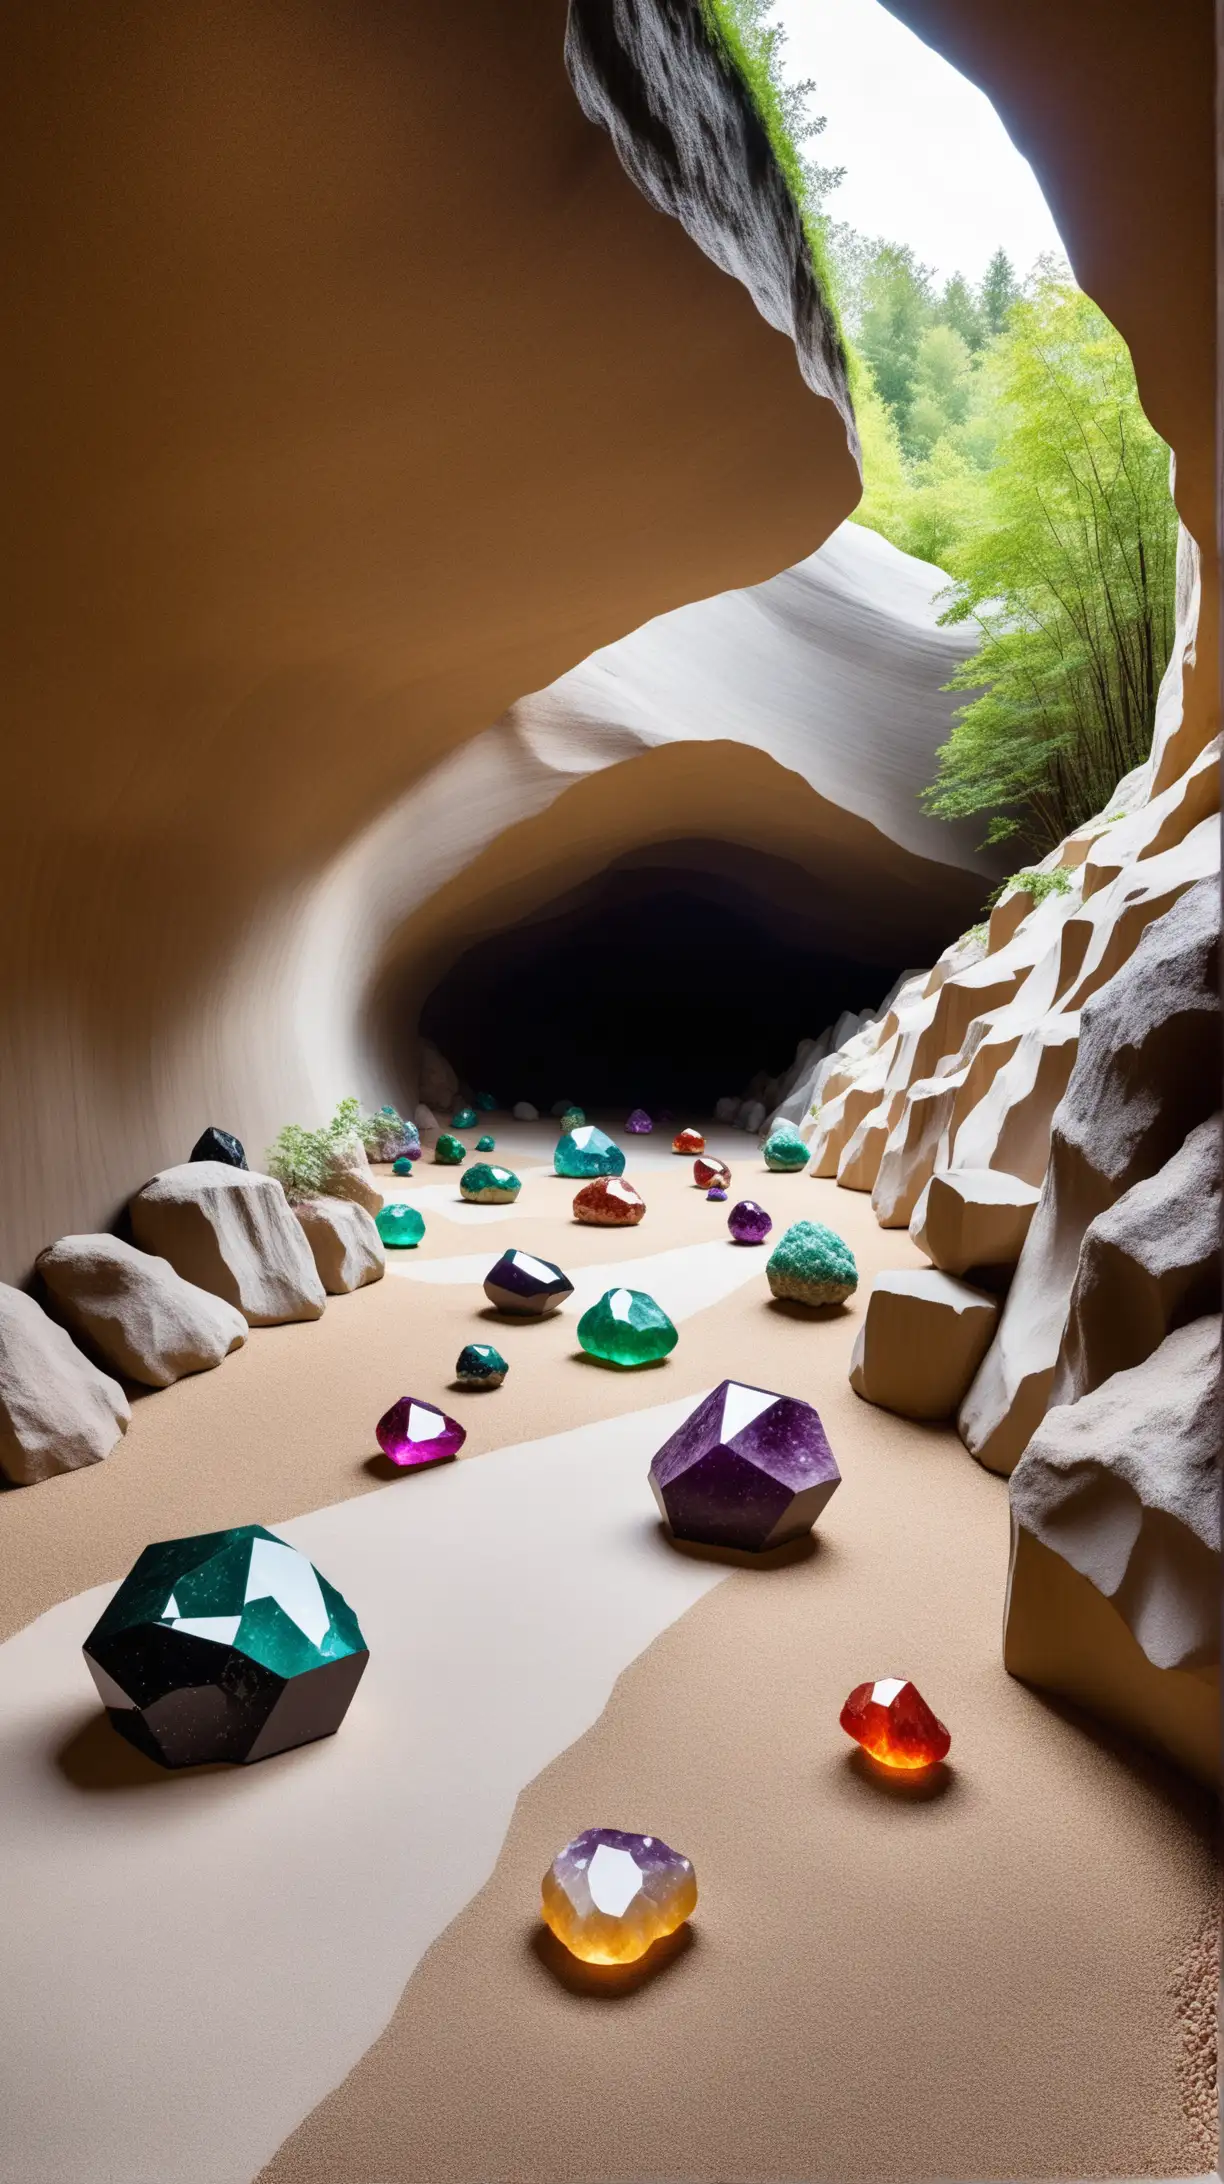 Bauhaus Style Gemstone Cave Vibrant Geodes in Land Art Display